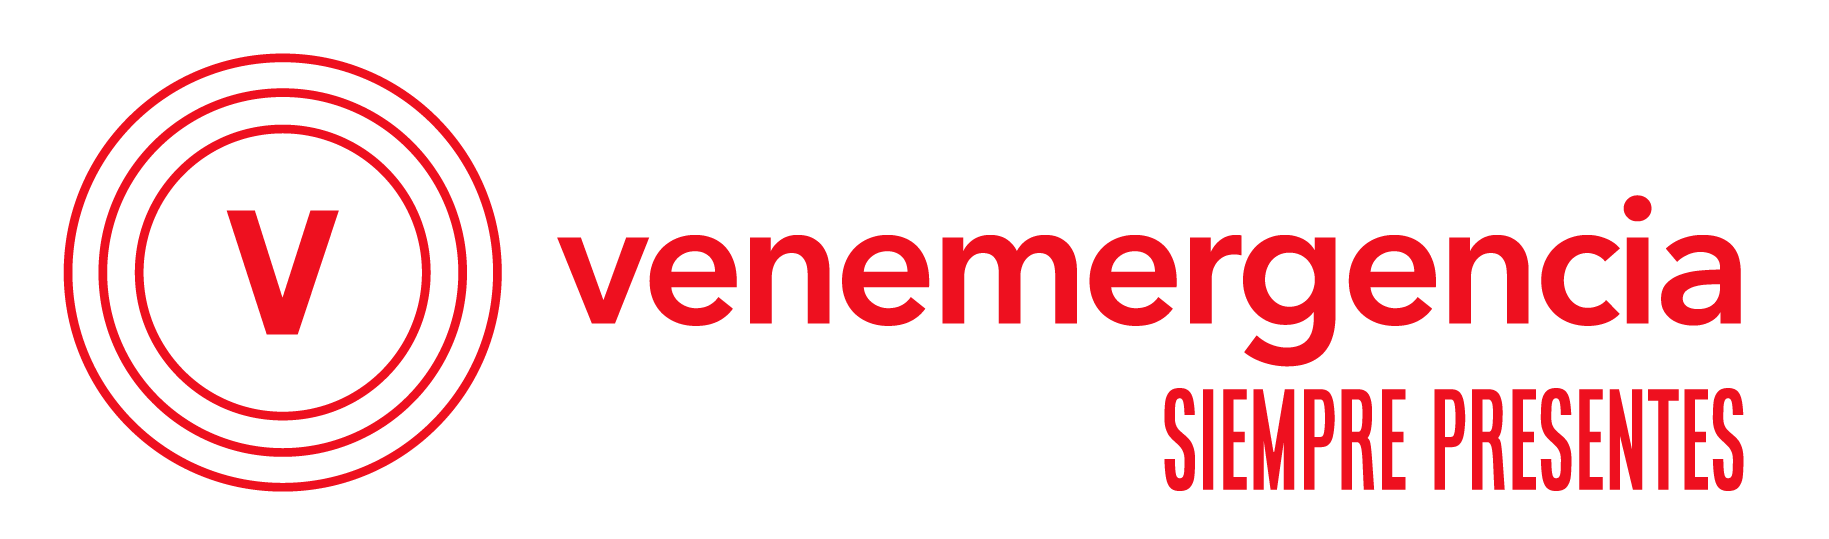 venemergencia logo